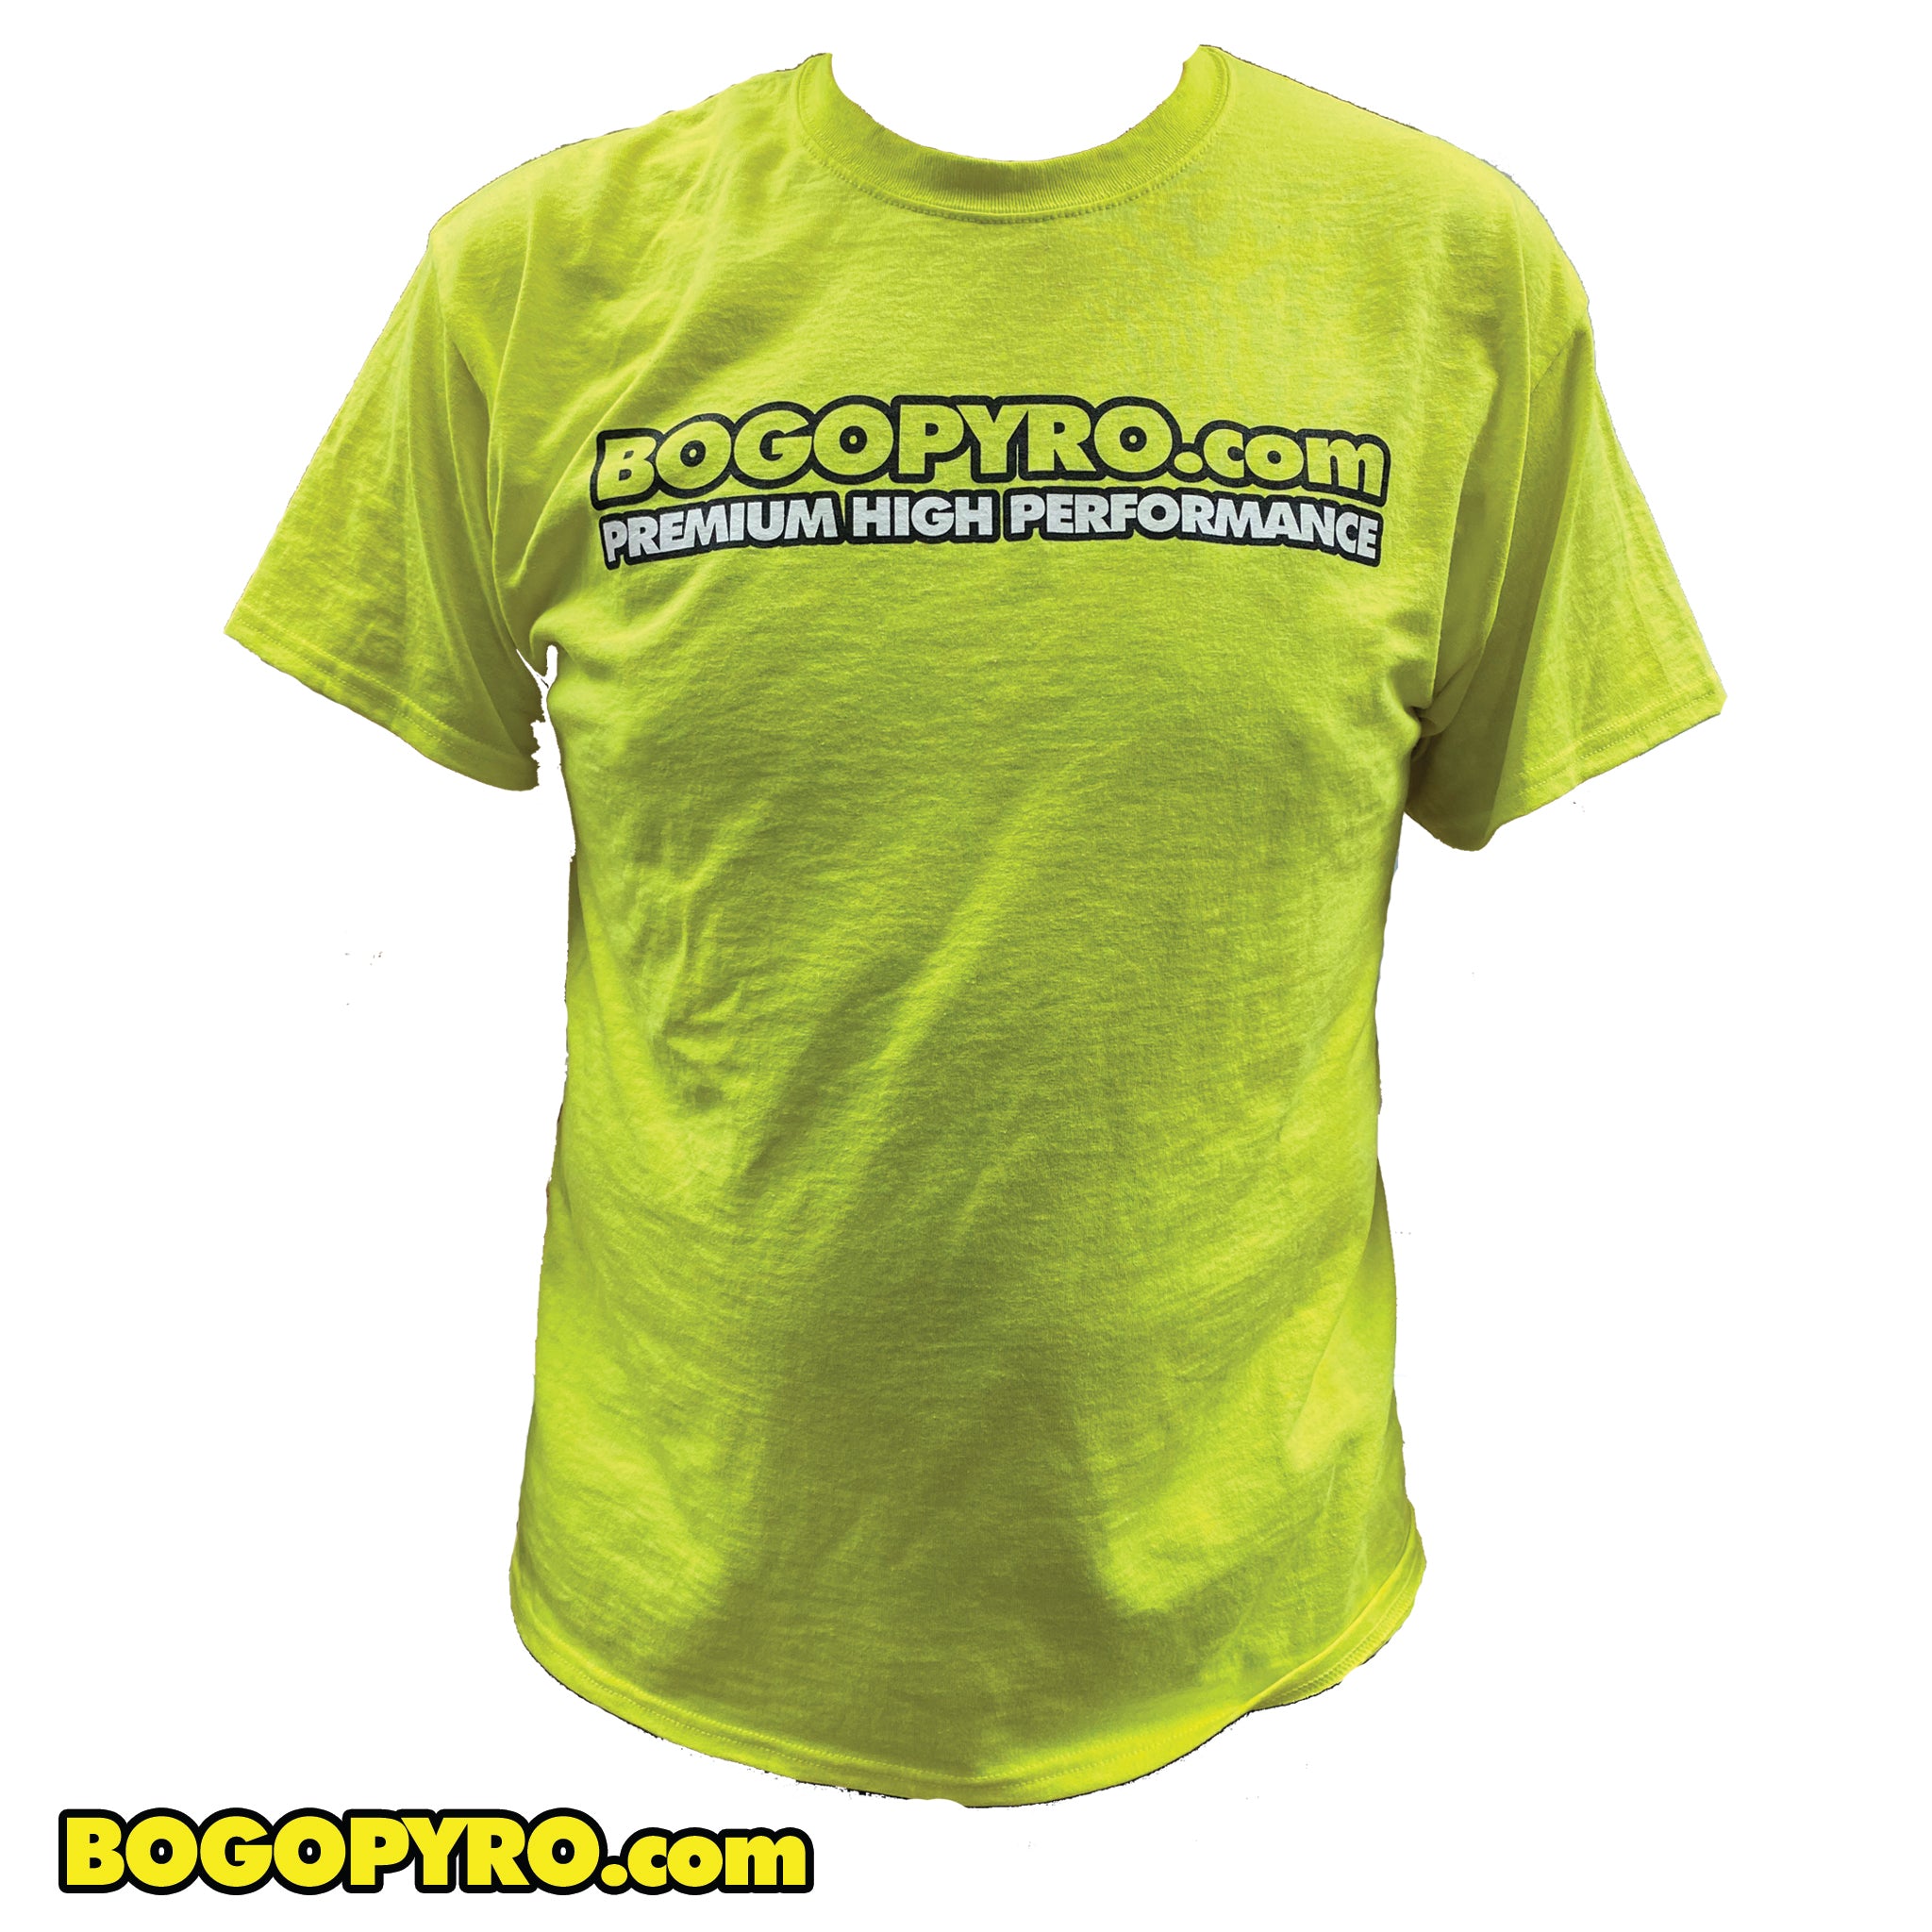 Bogopyro Com T Shirt One Size Fits All